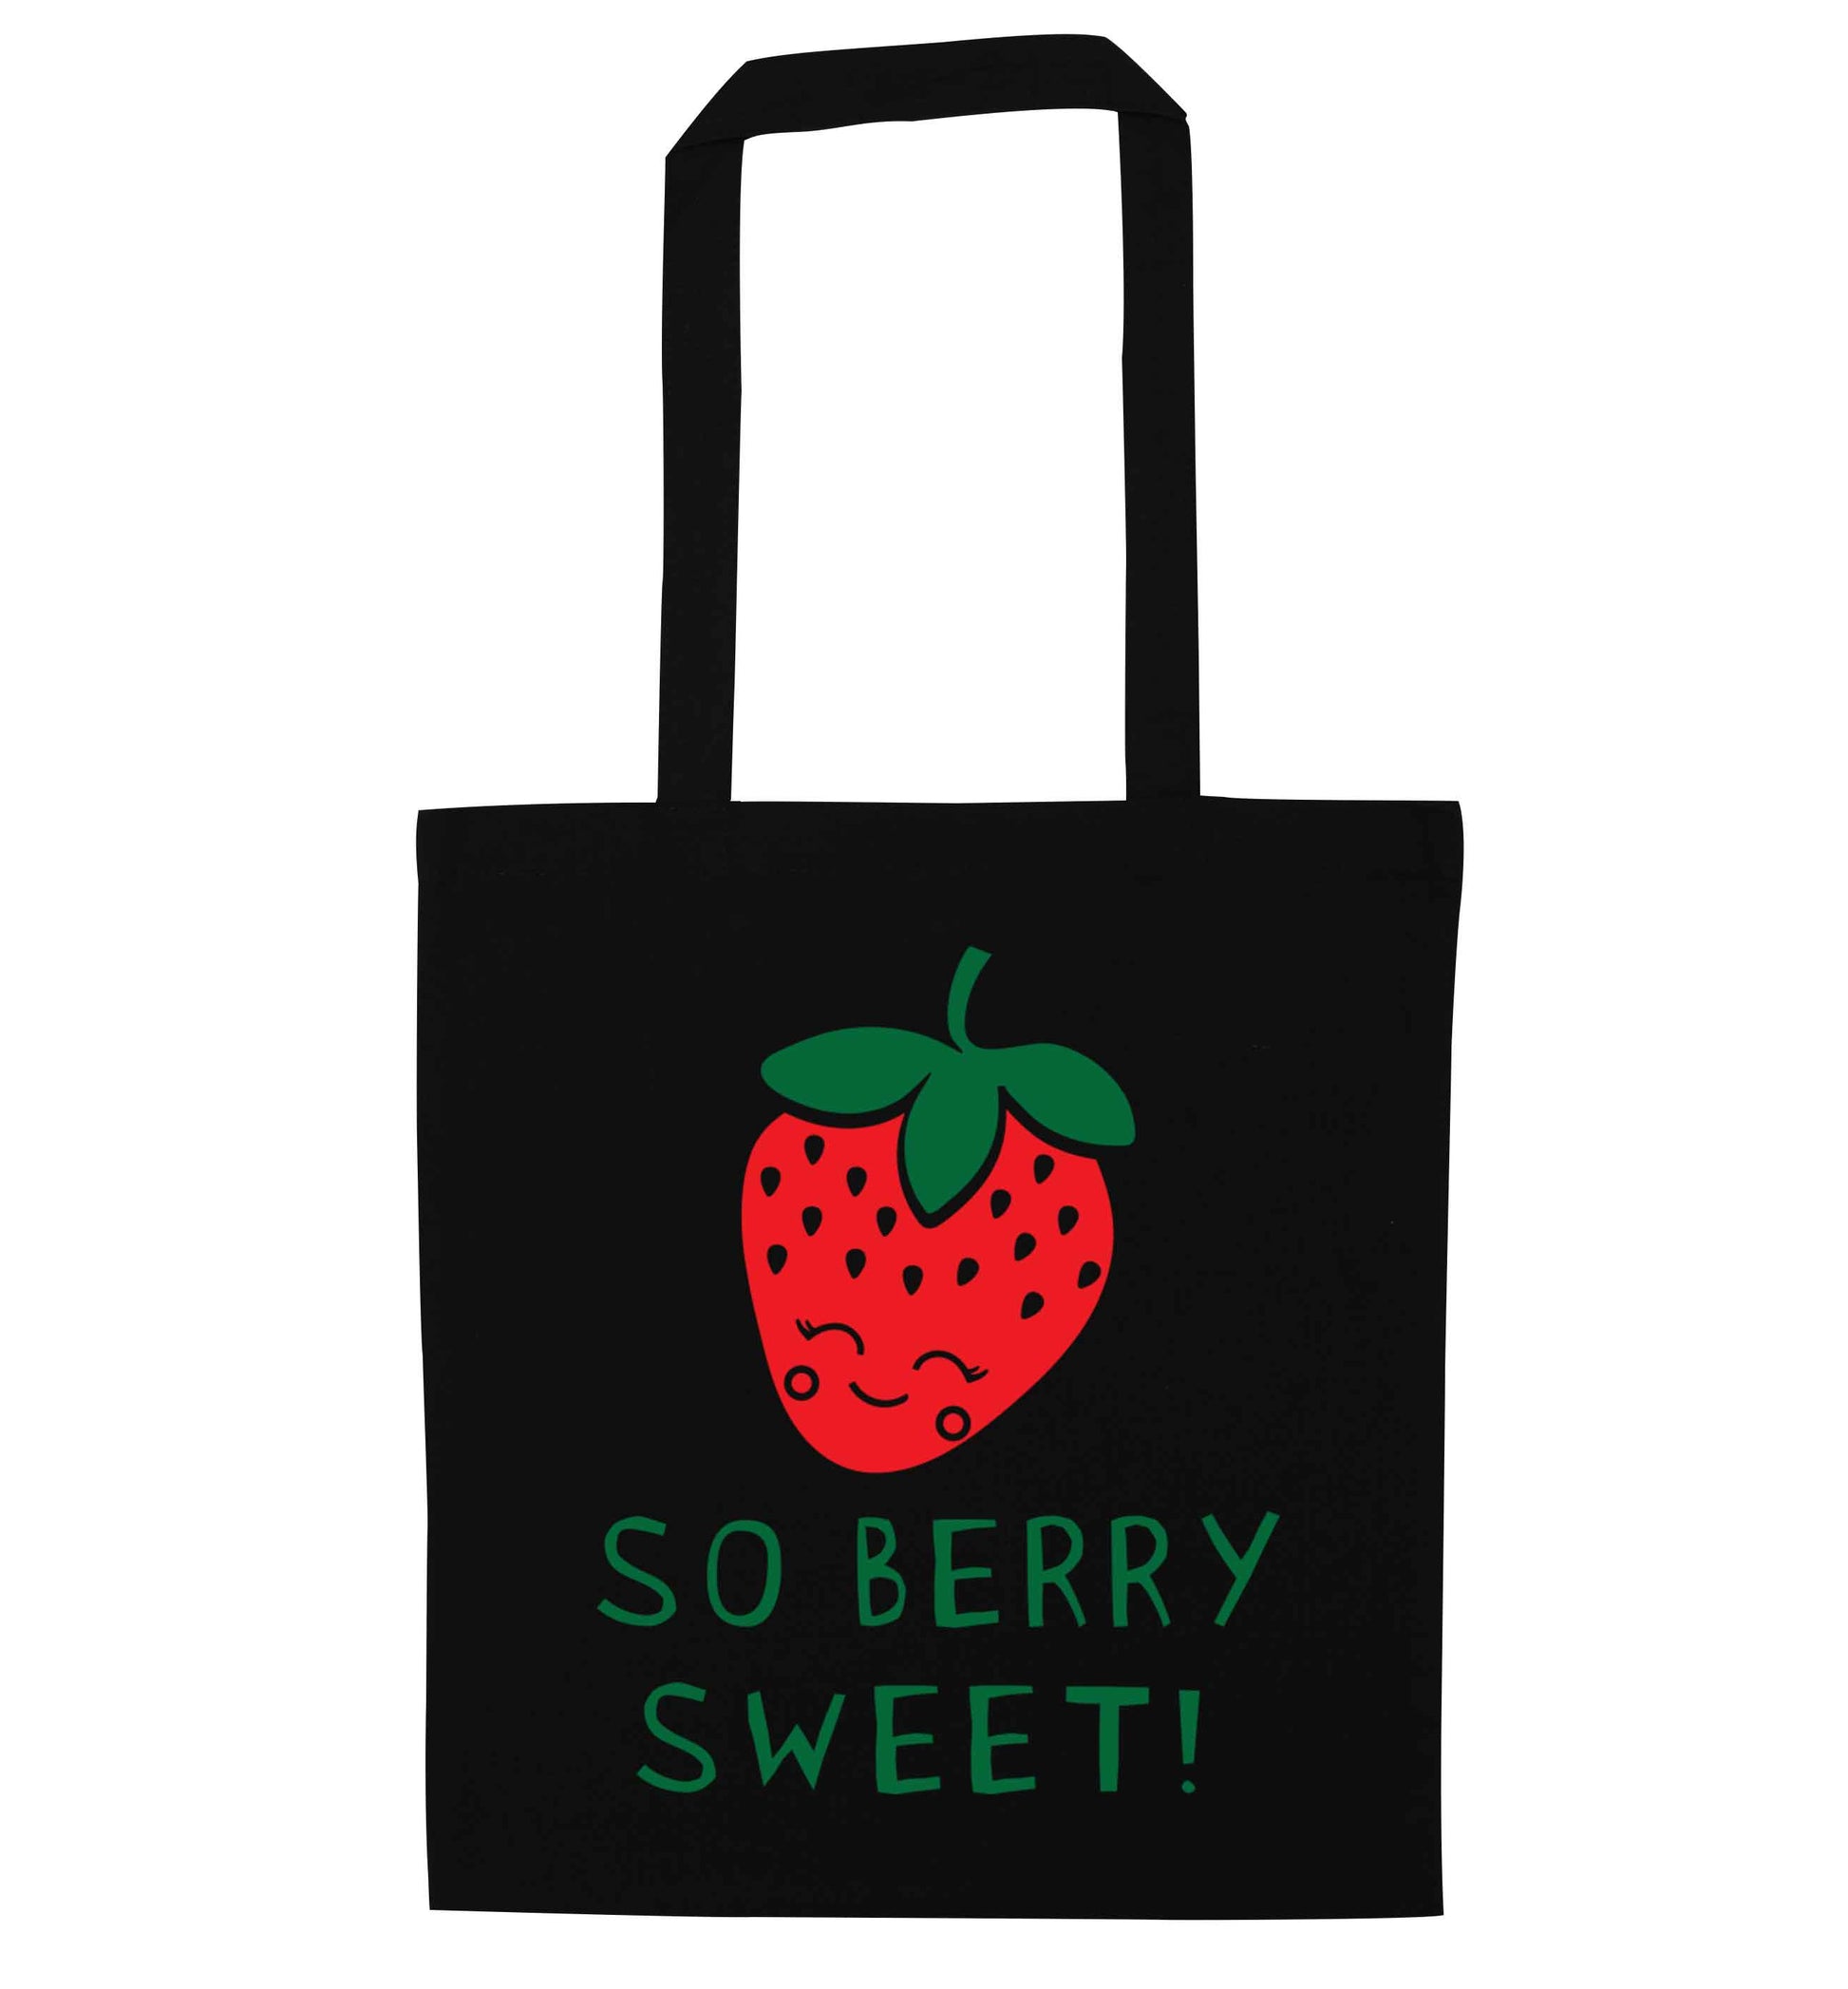 So berry sweet black tote bag